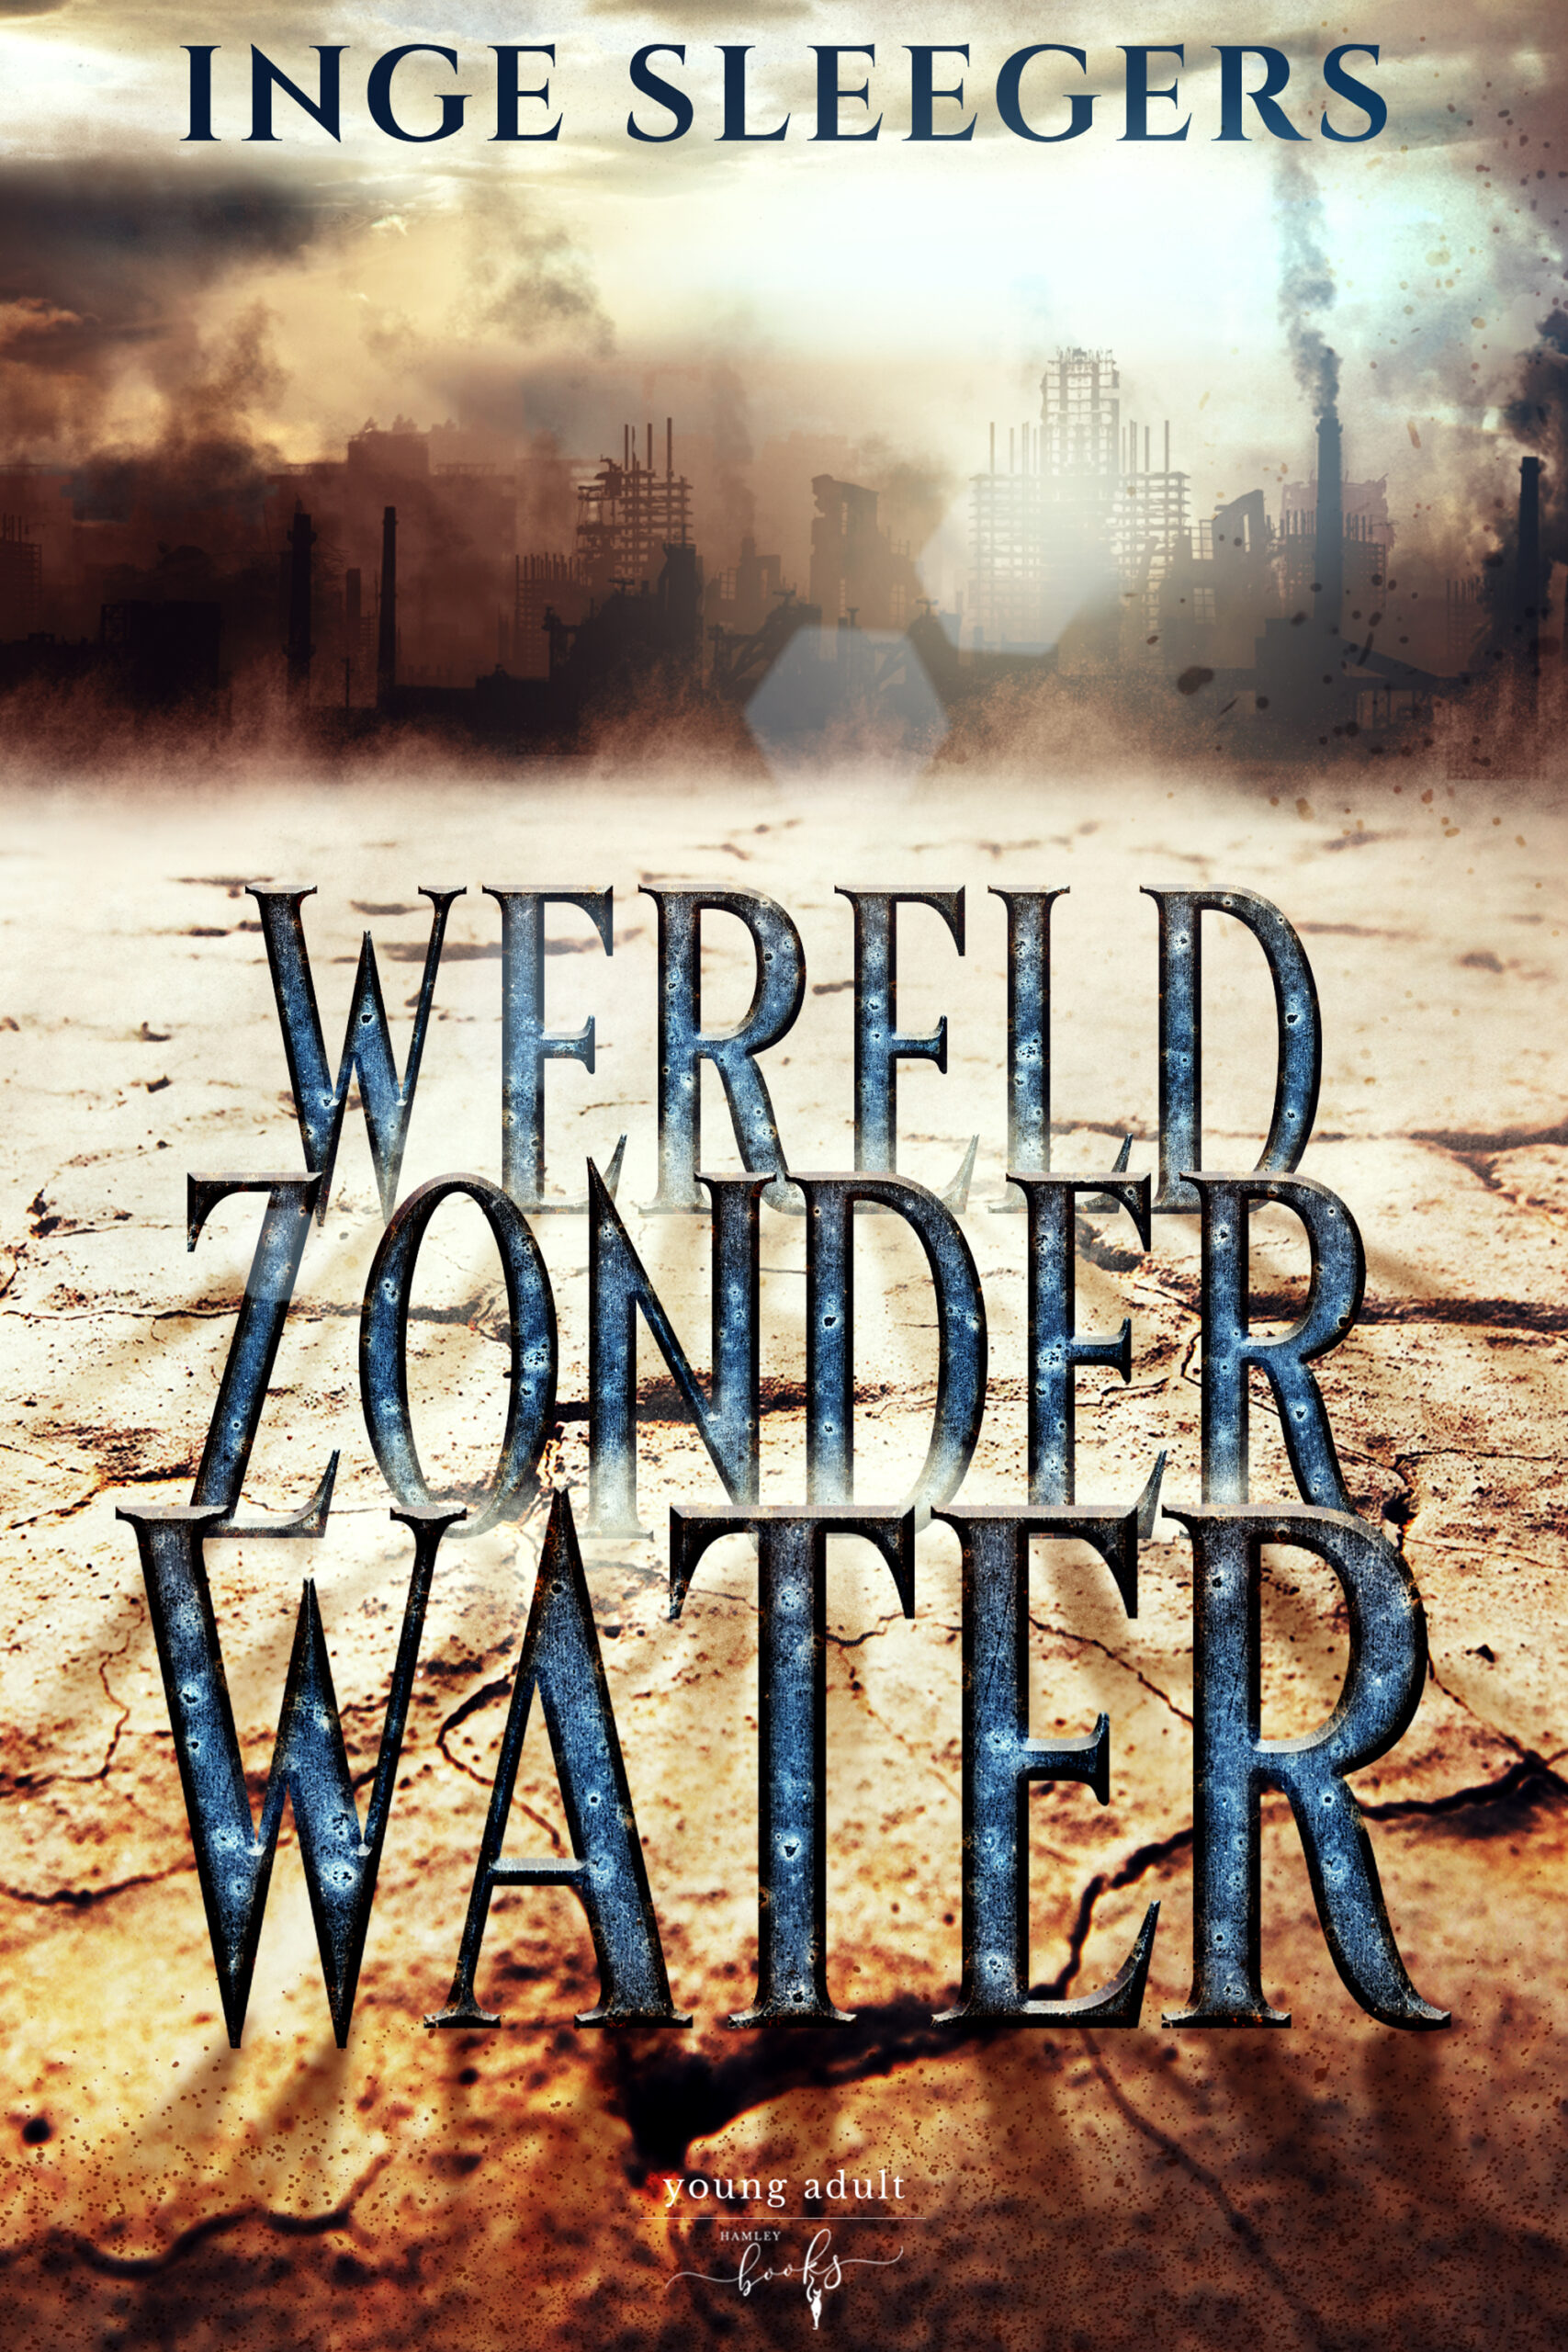 Wereld zonder water- Inge Sleegers - Young Adult - HamleyBooks